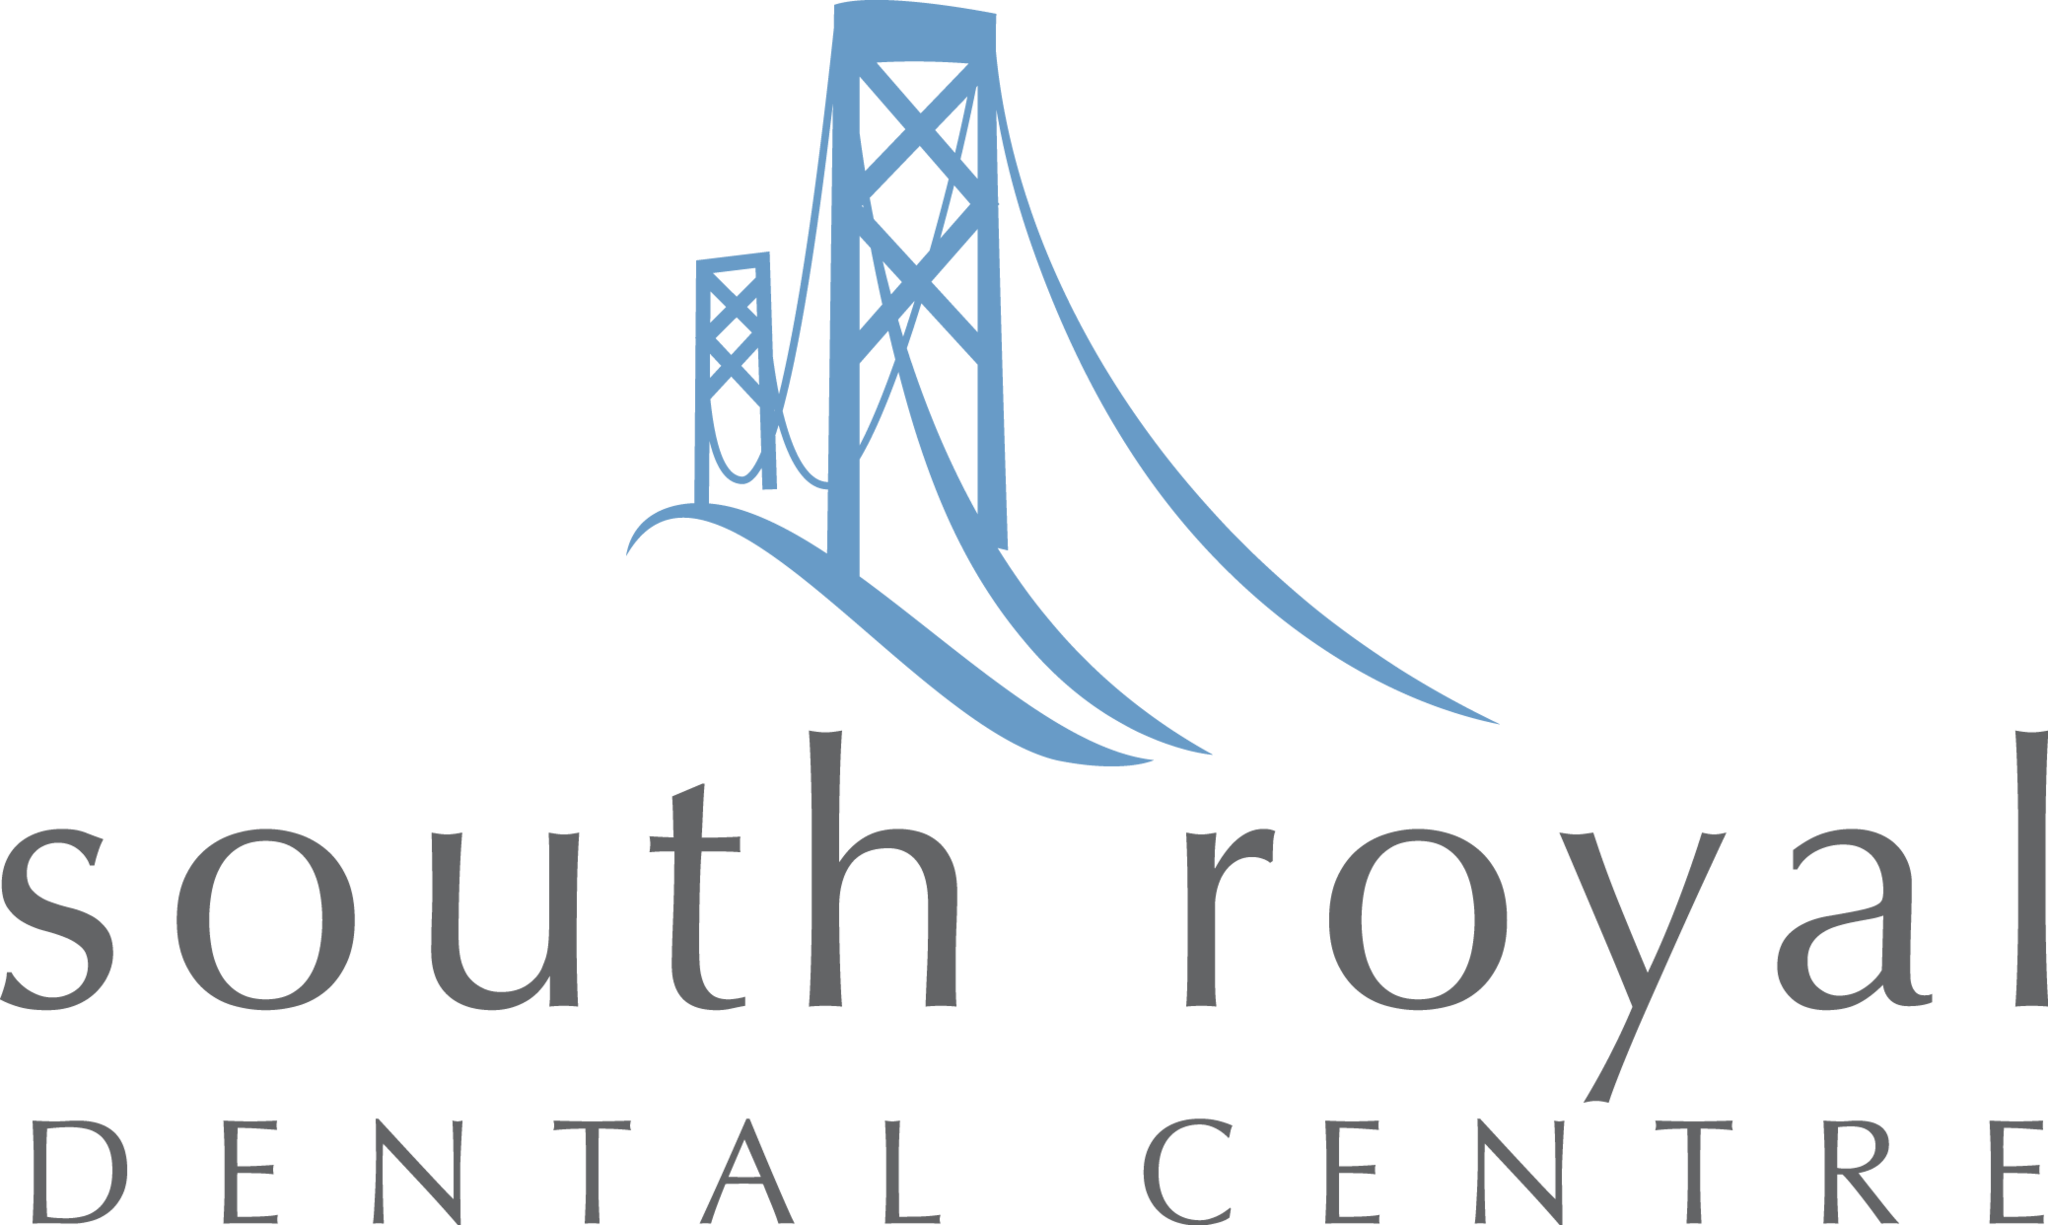 South Royal Dental Centre logo